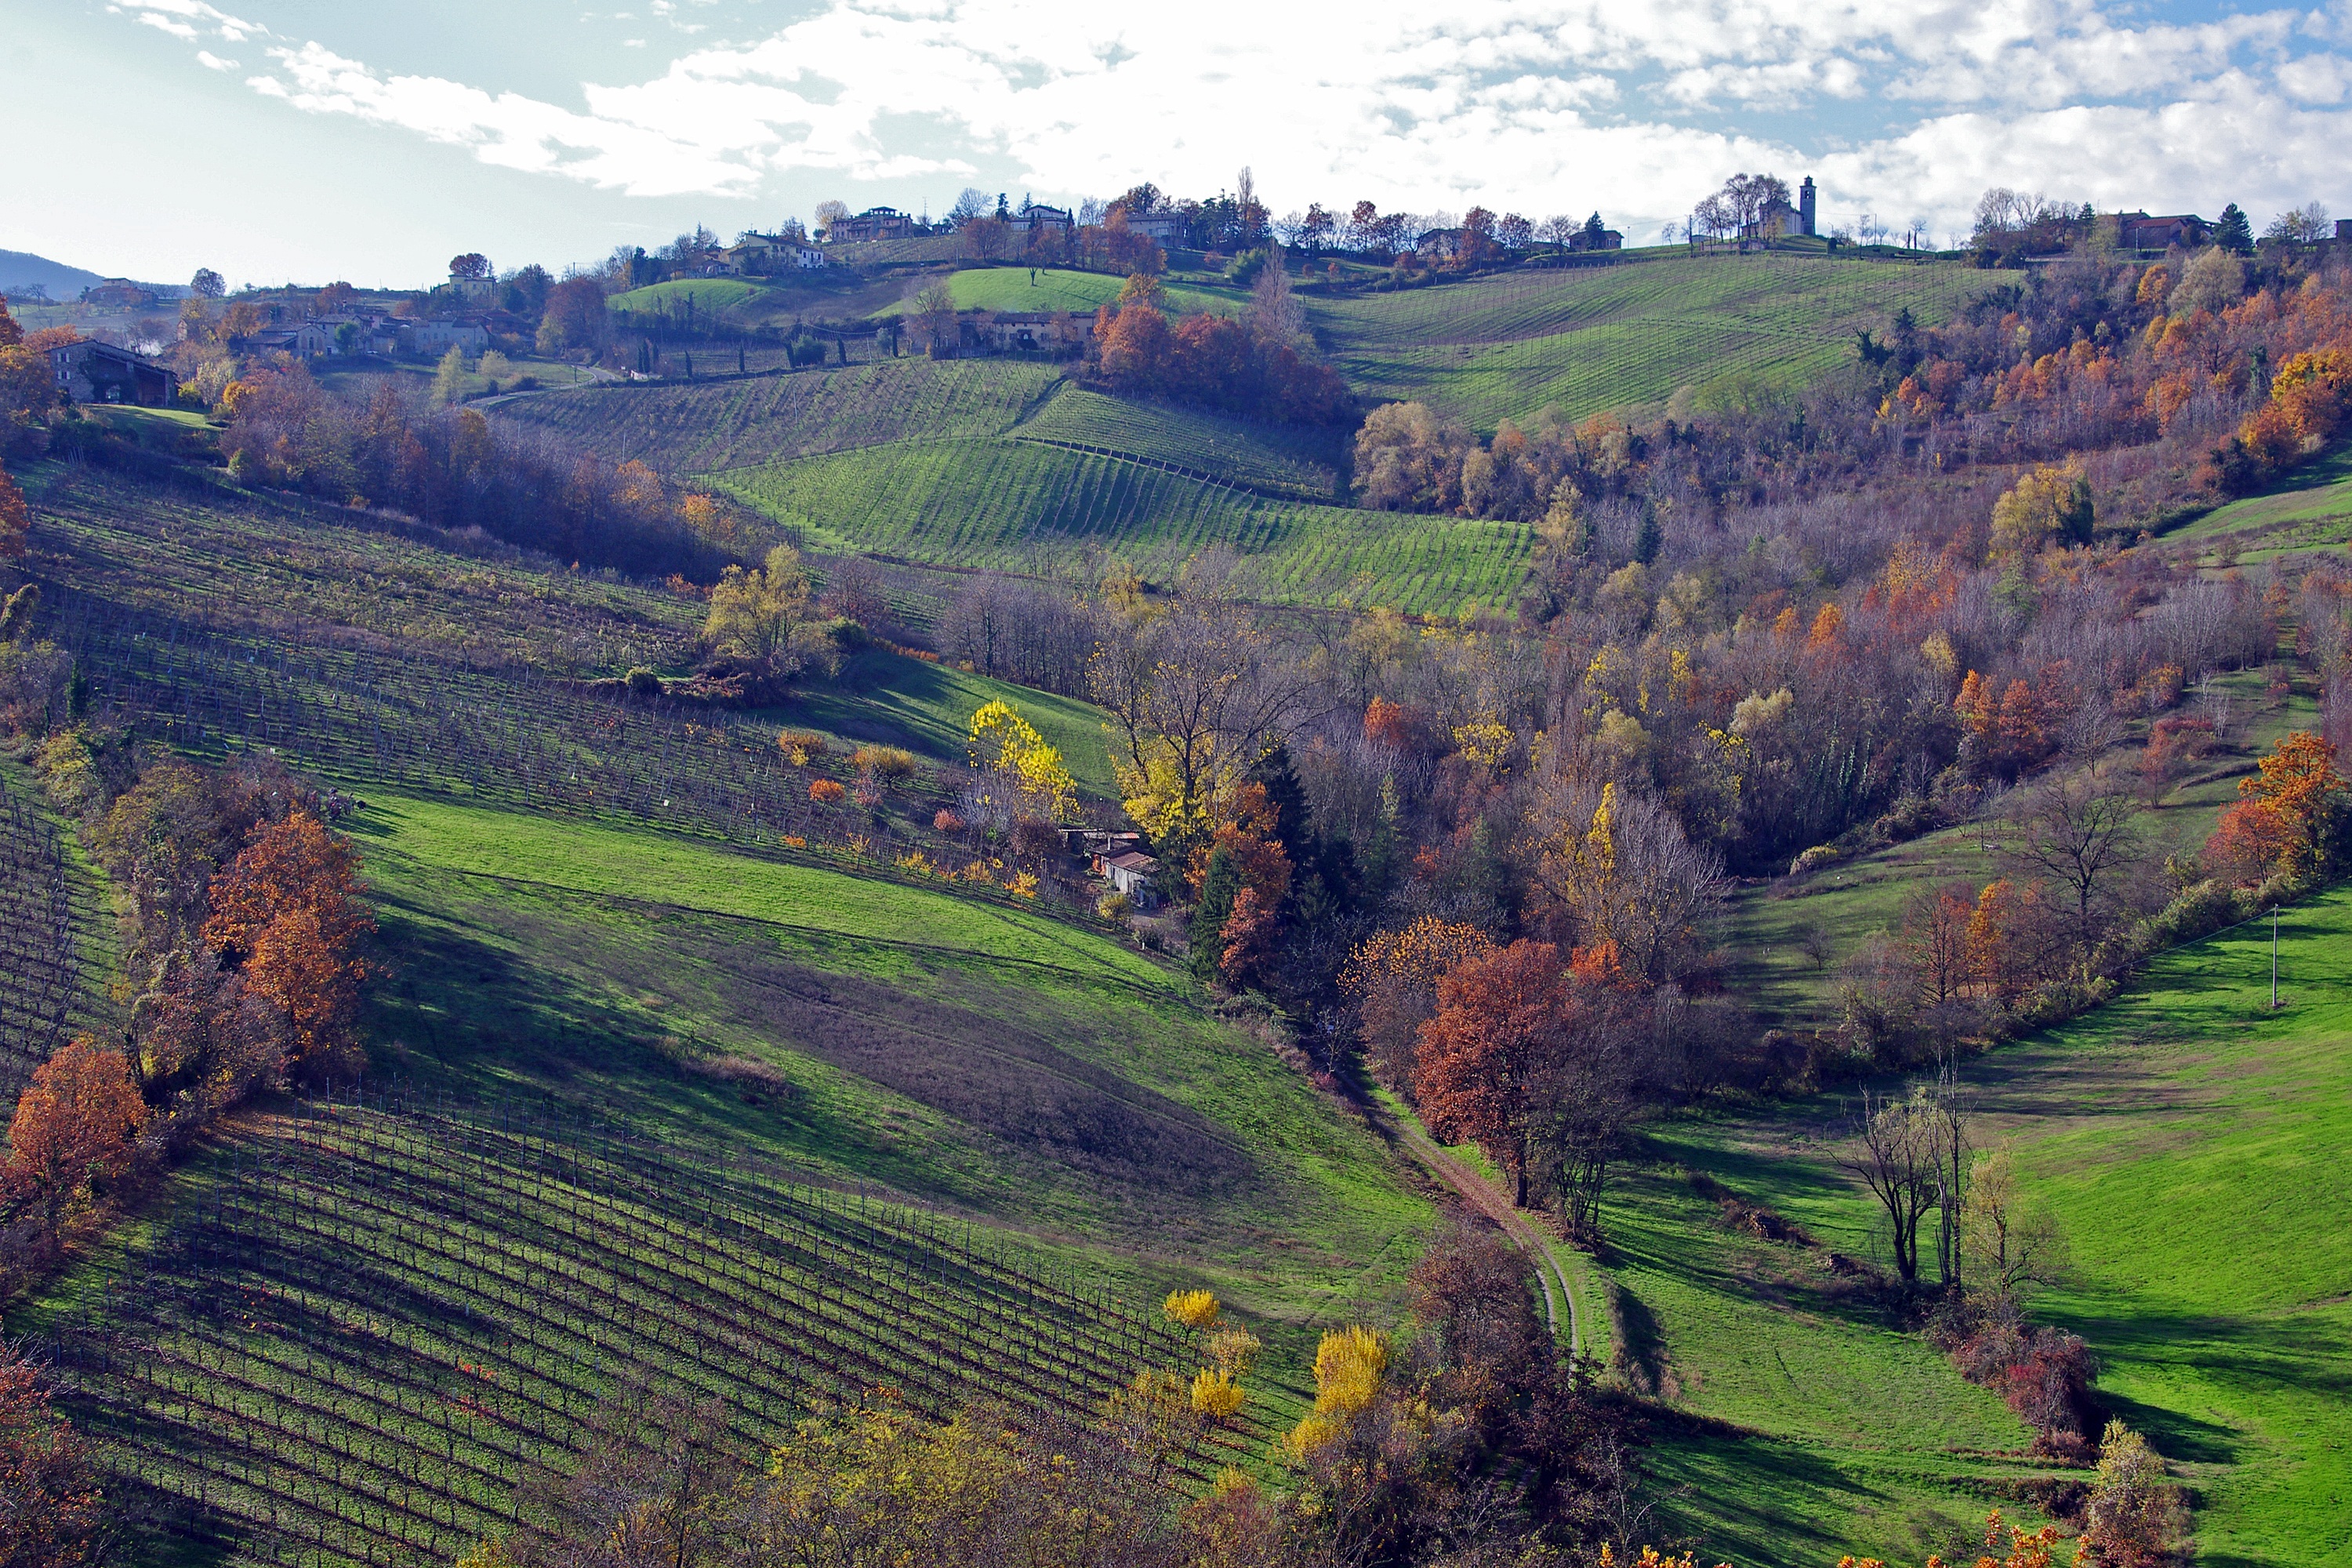 Vineyards in Emilia Romagna. Photo by Valter Cirillo from Pixabay.